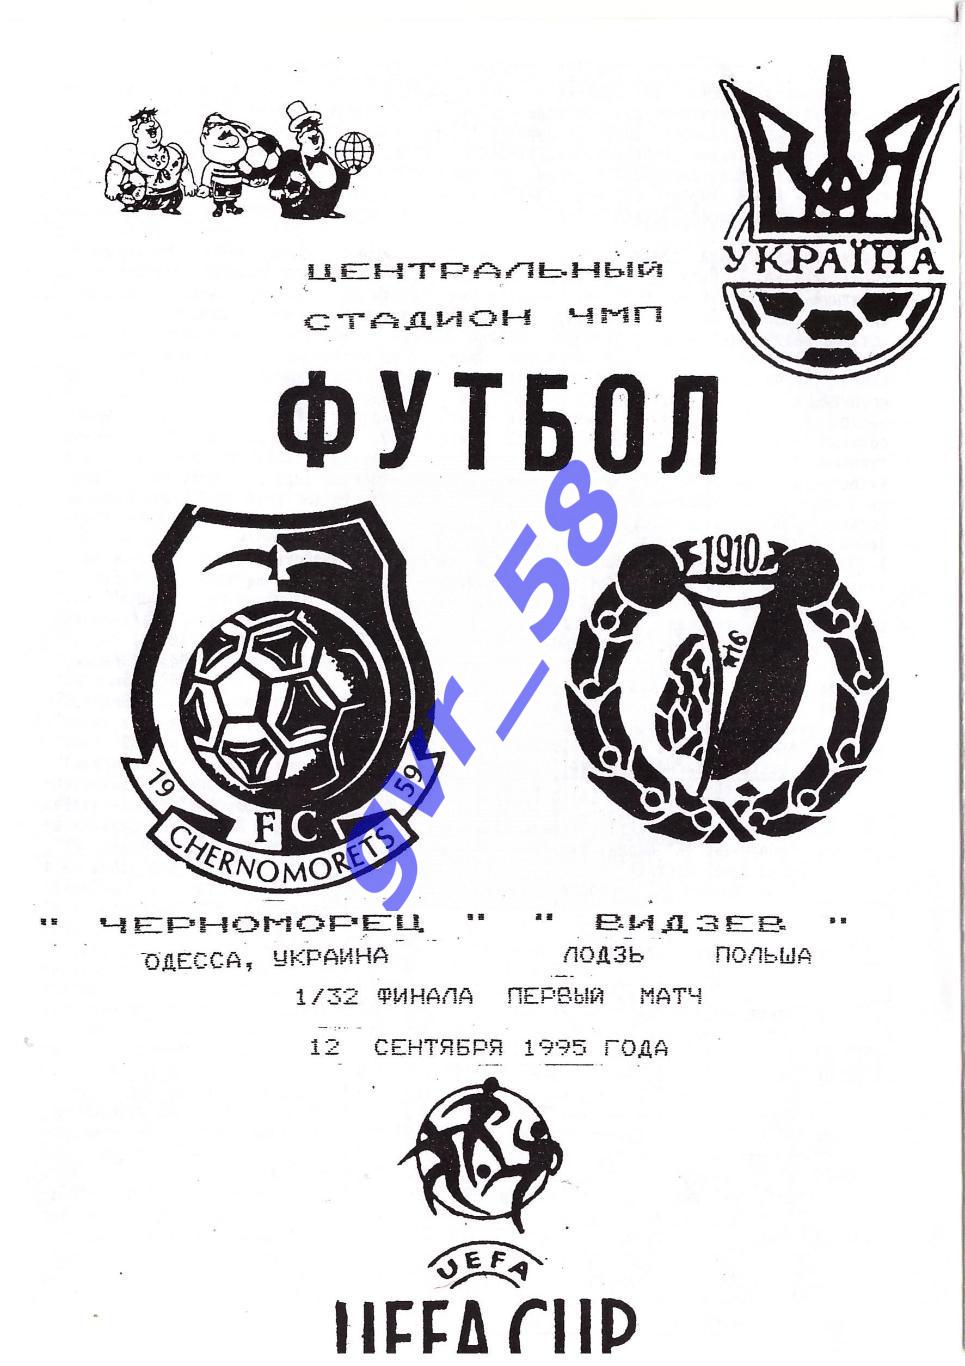 Черноморец Одесса - Видзев Лодзь 12.09.1995